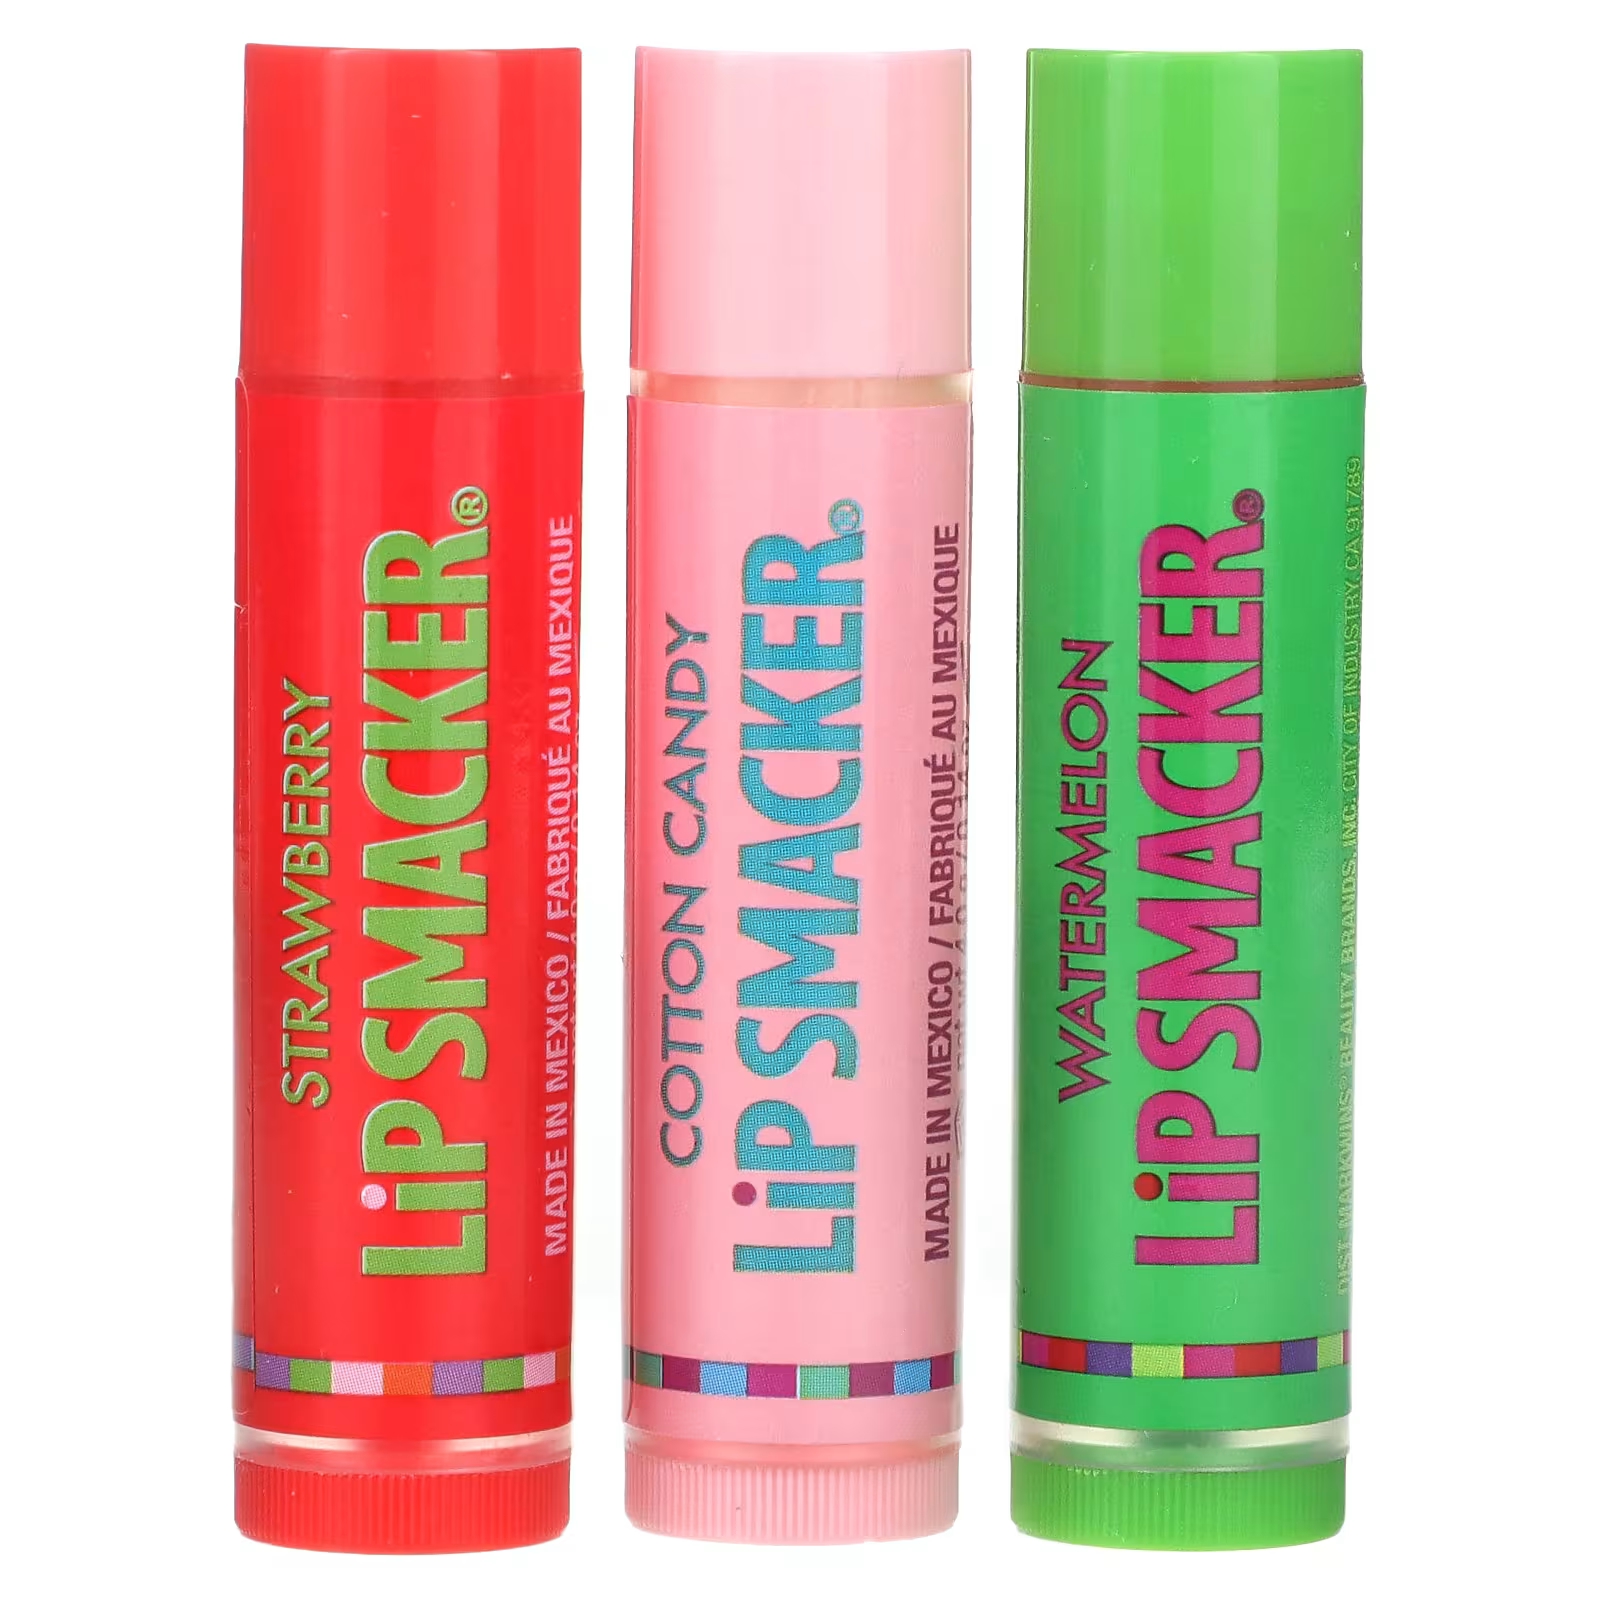 Бальзам для губ Lip Smacker Original & Best Flavors клубника, сахарная вата, арбуз цена и фото